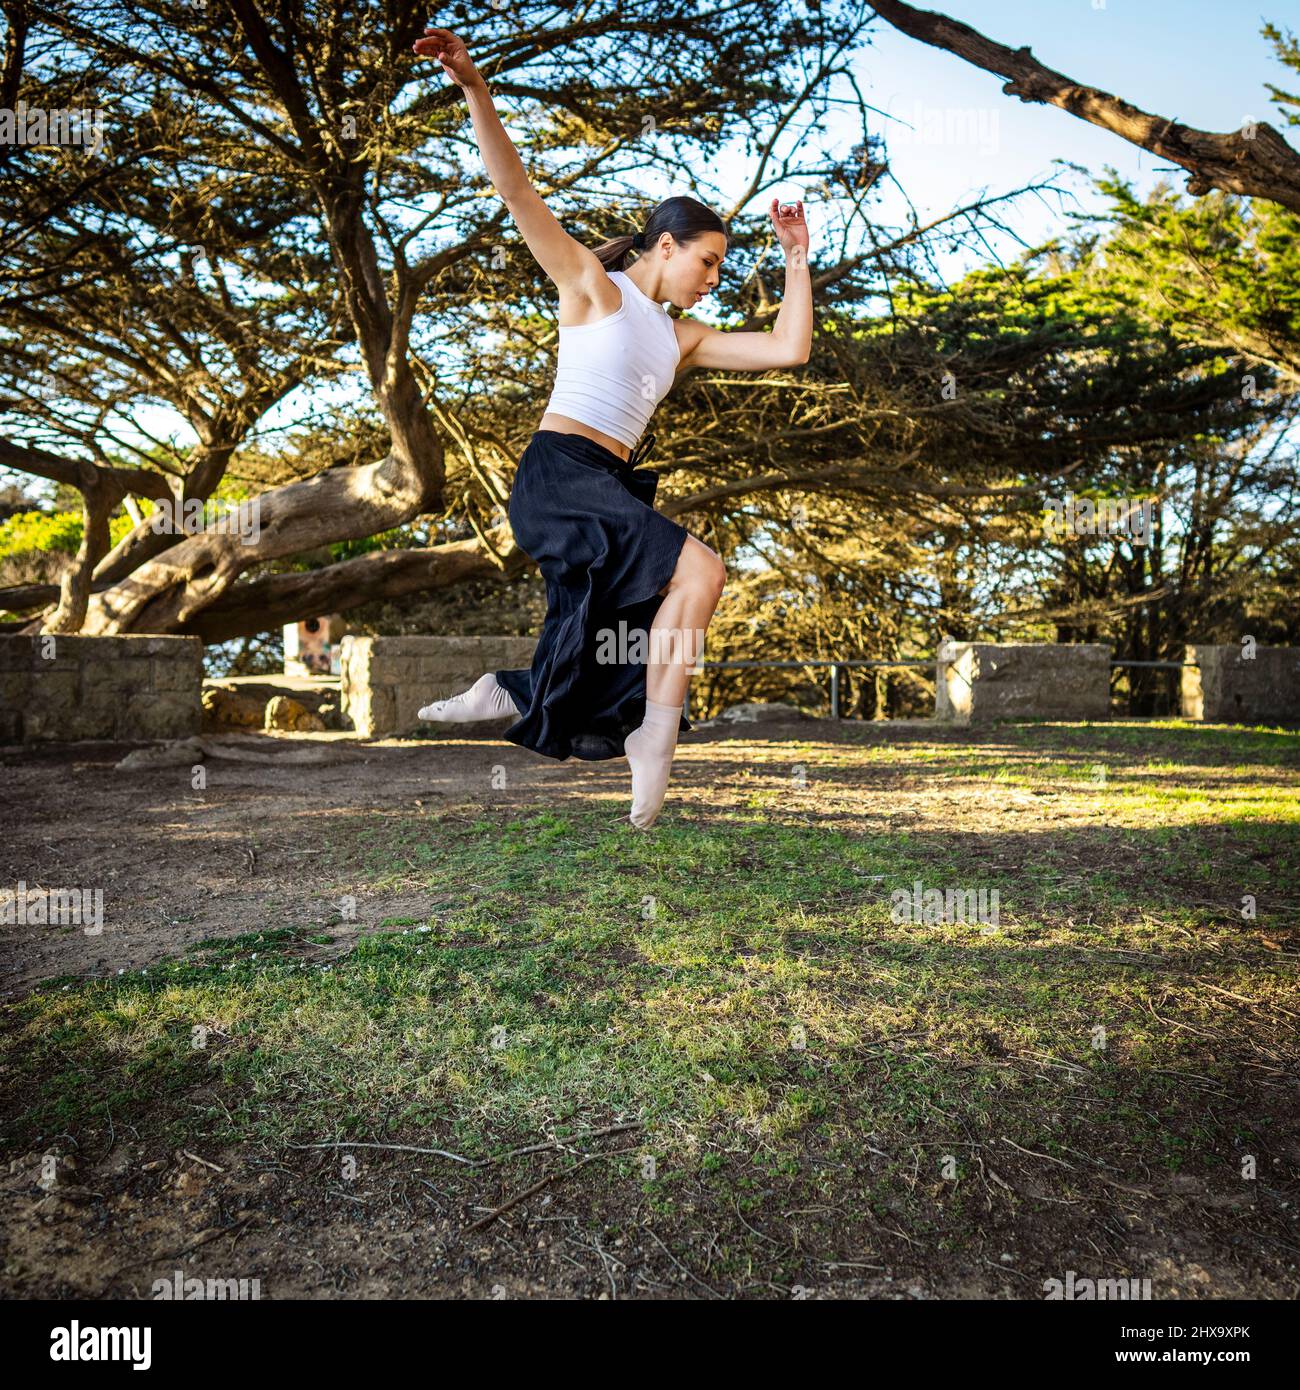 Teenager-Tänzerin beim Springen im baumgesäumten Park Stockfoto